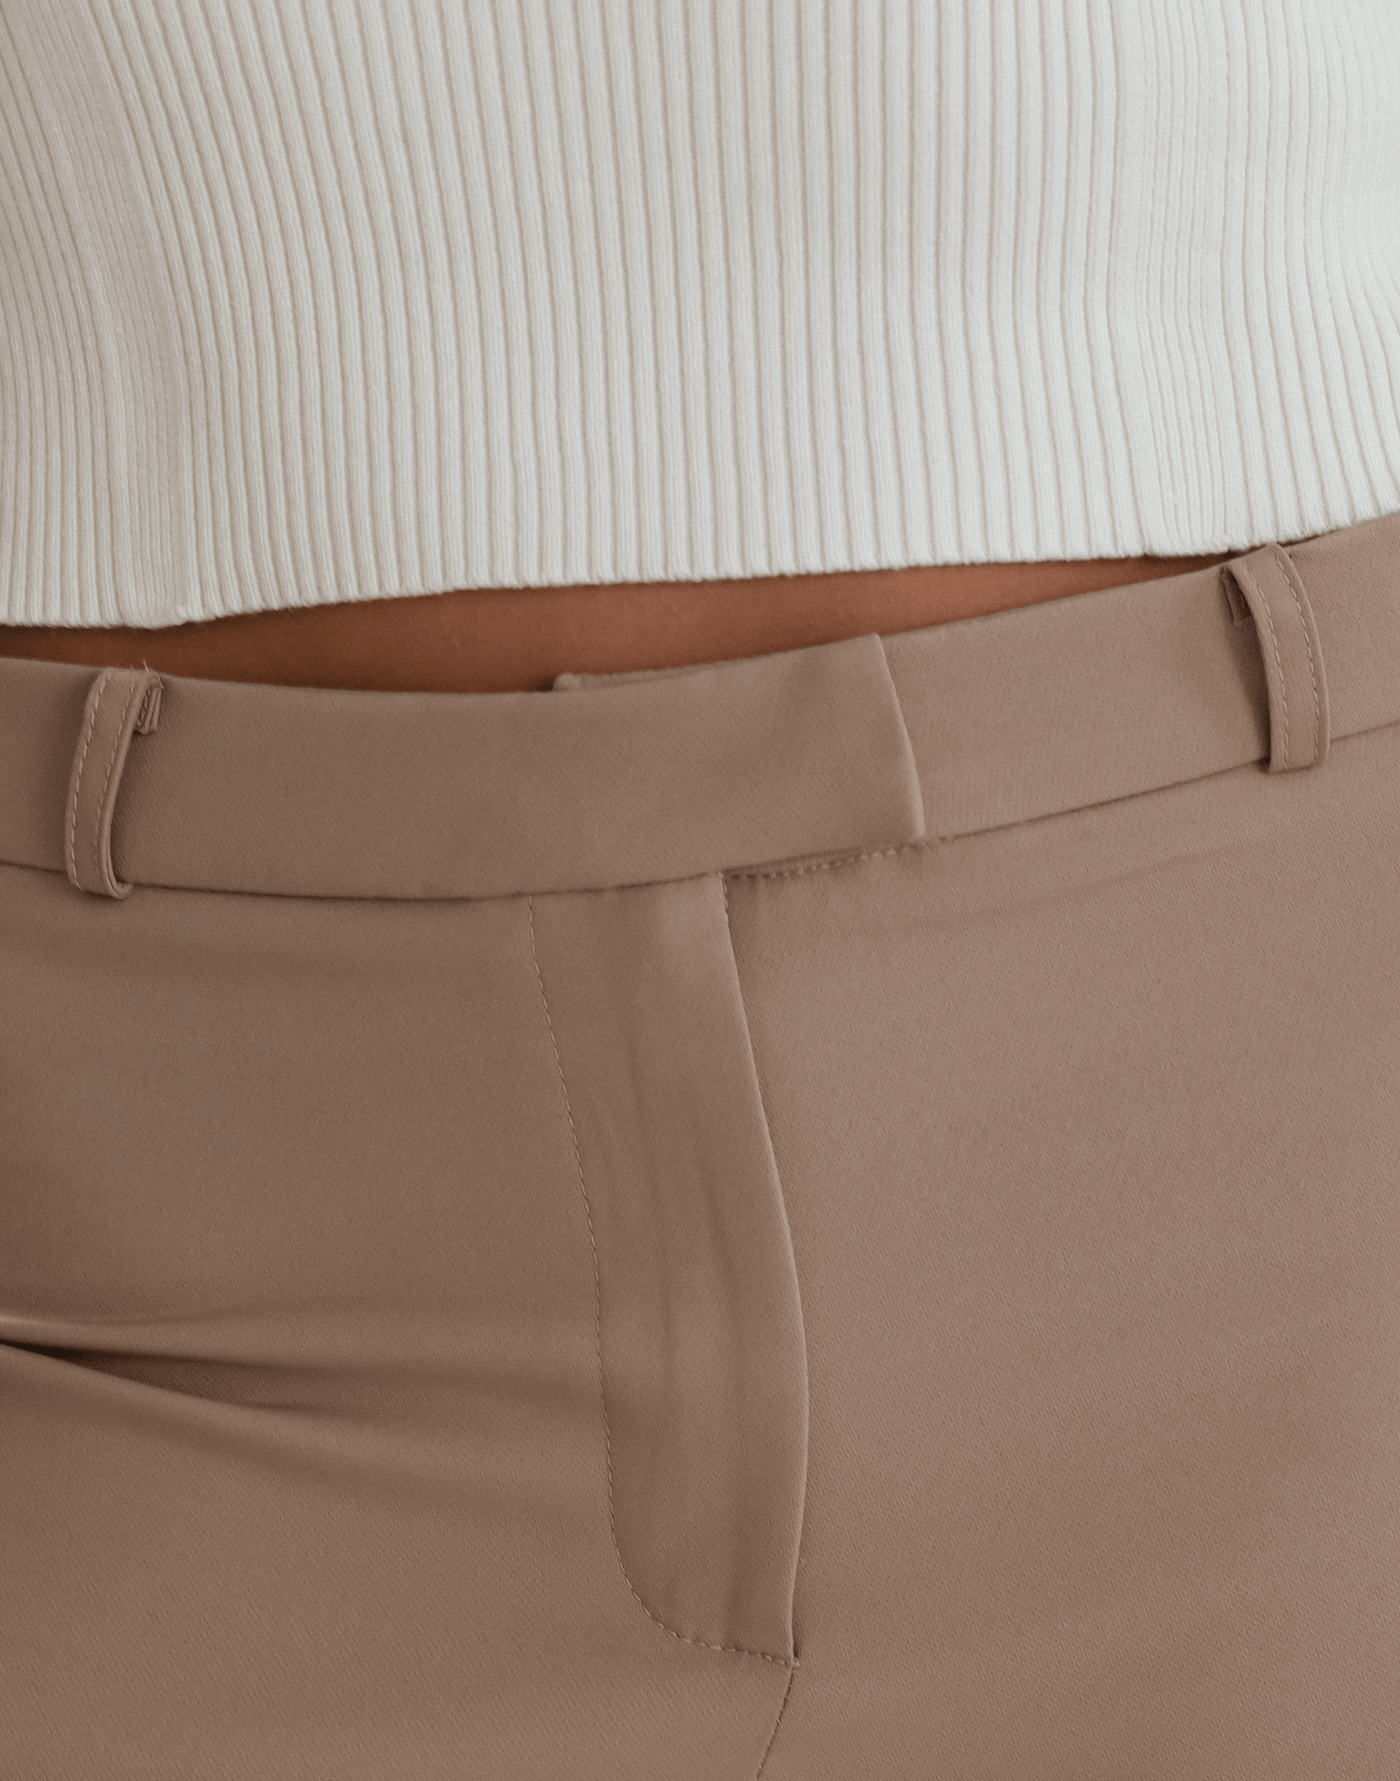 PRE ORDER: Xali Pants (Mushroom) - Mid Waisted Pants - Women's Pants - Charcoal Clothing